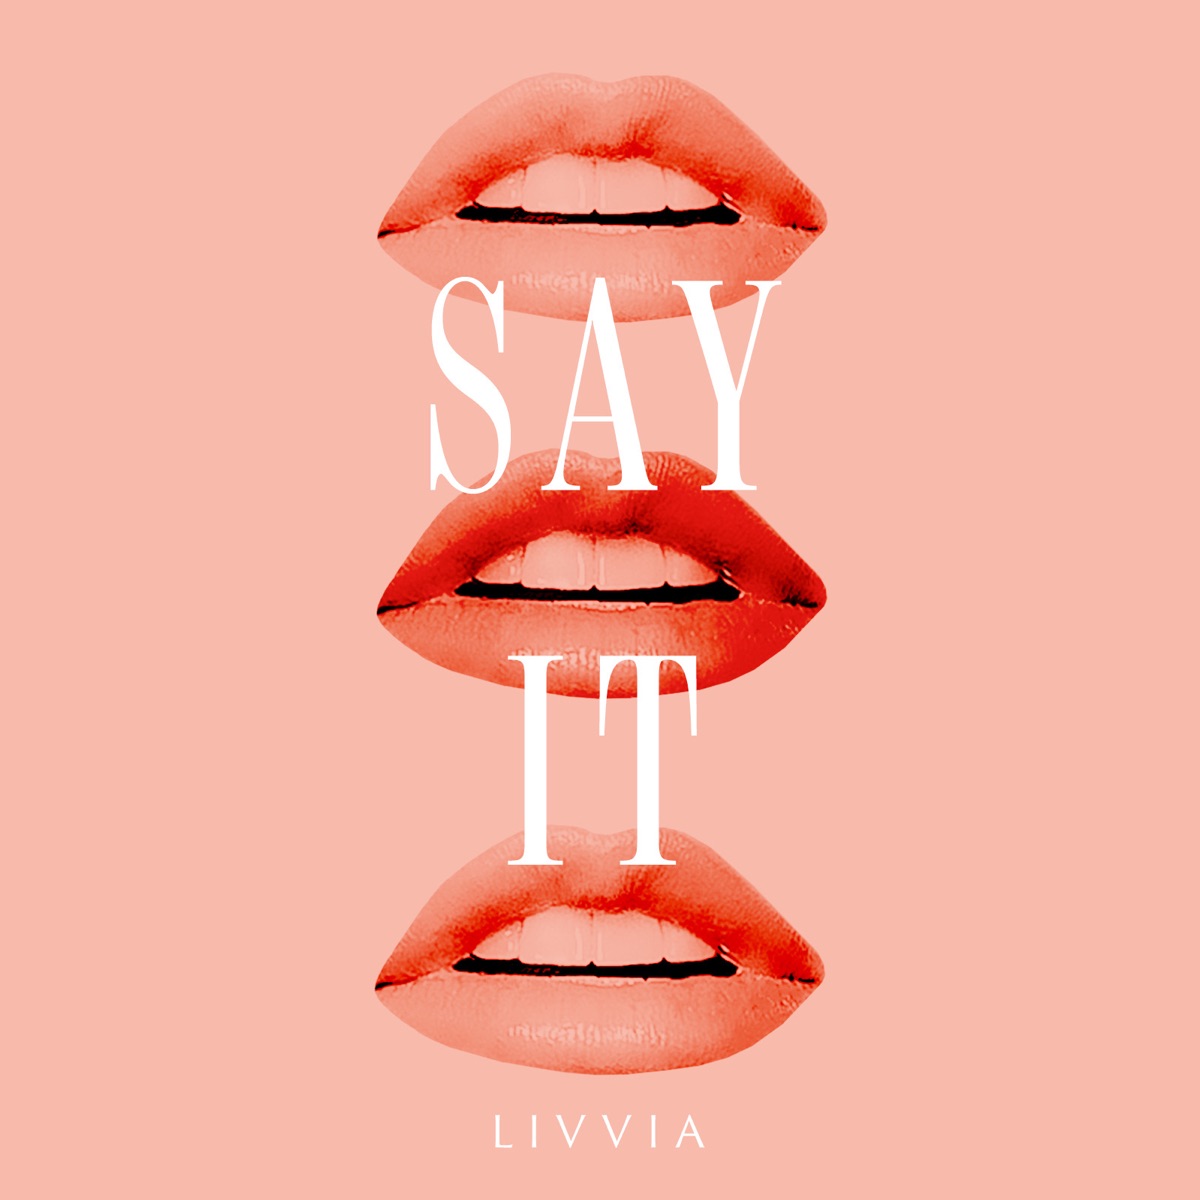 LIVVIA Say It cover artwork